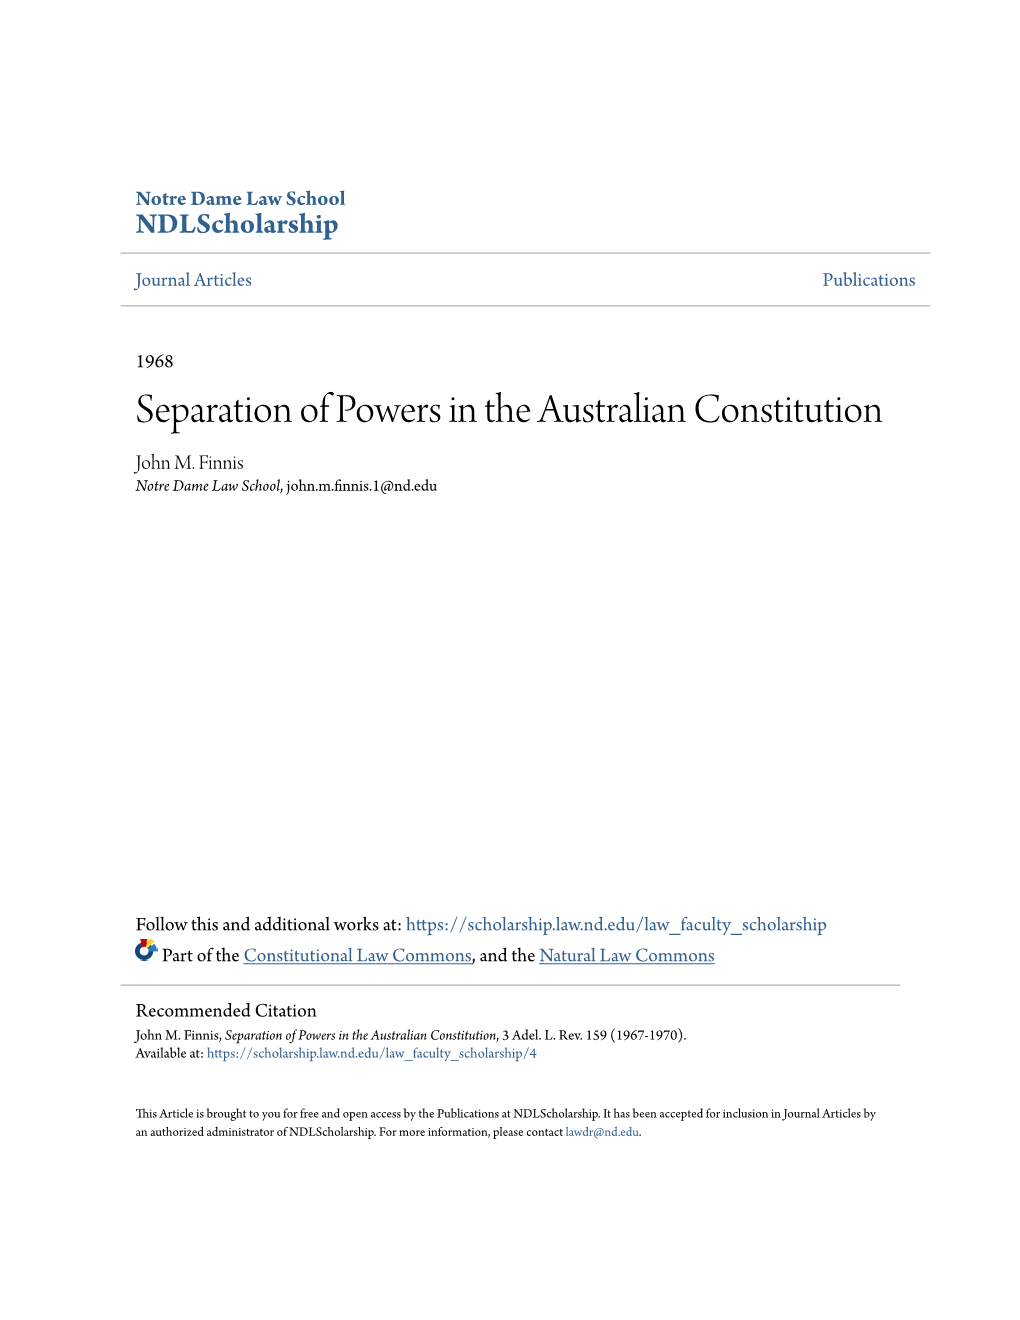 Separation of Powers in the Australian Constitution John M